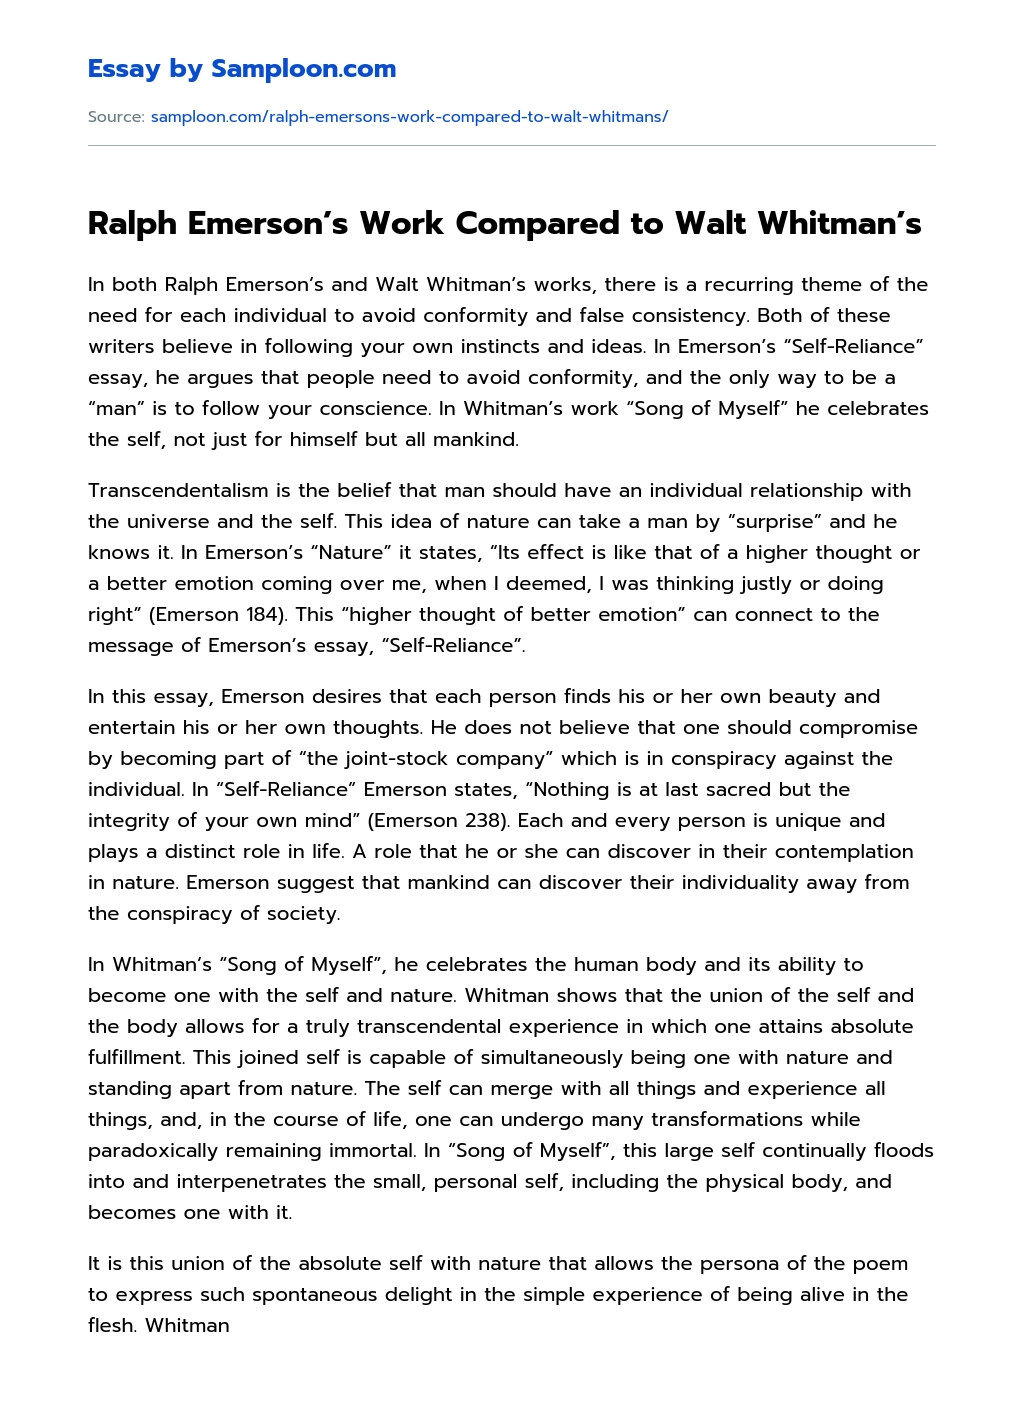 Ralph Emerson’s Work Compared to Walt Whitman’s essay